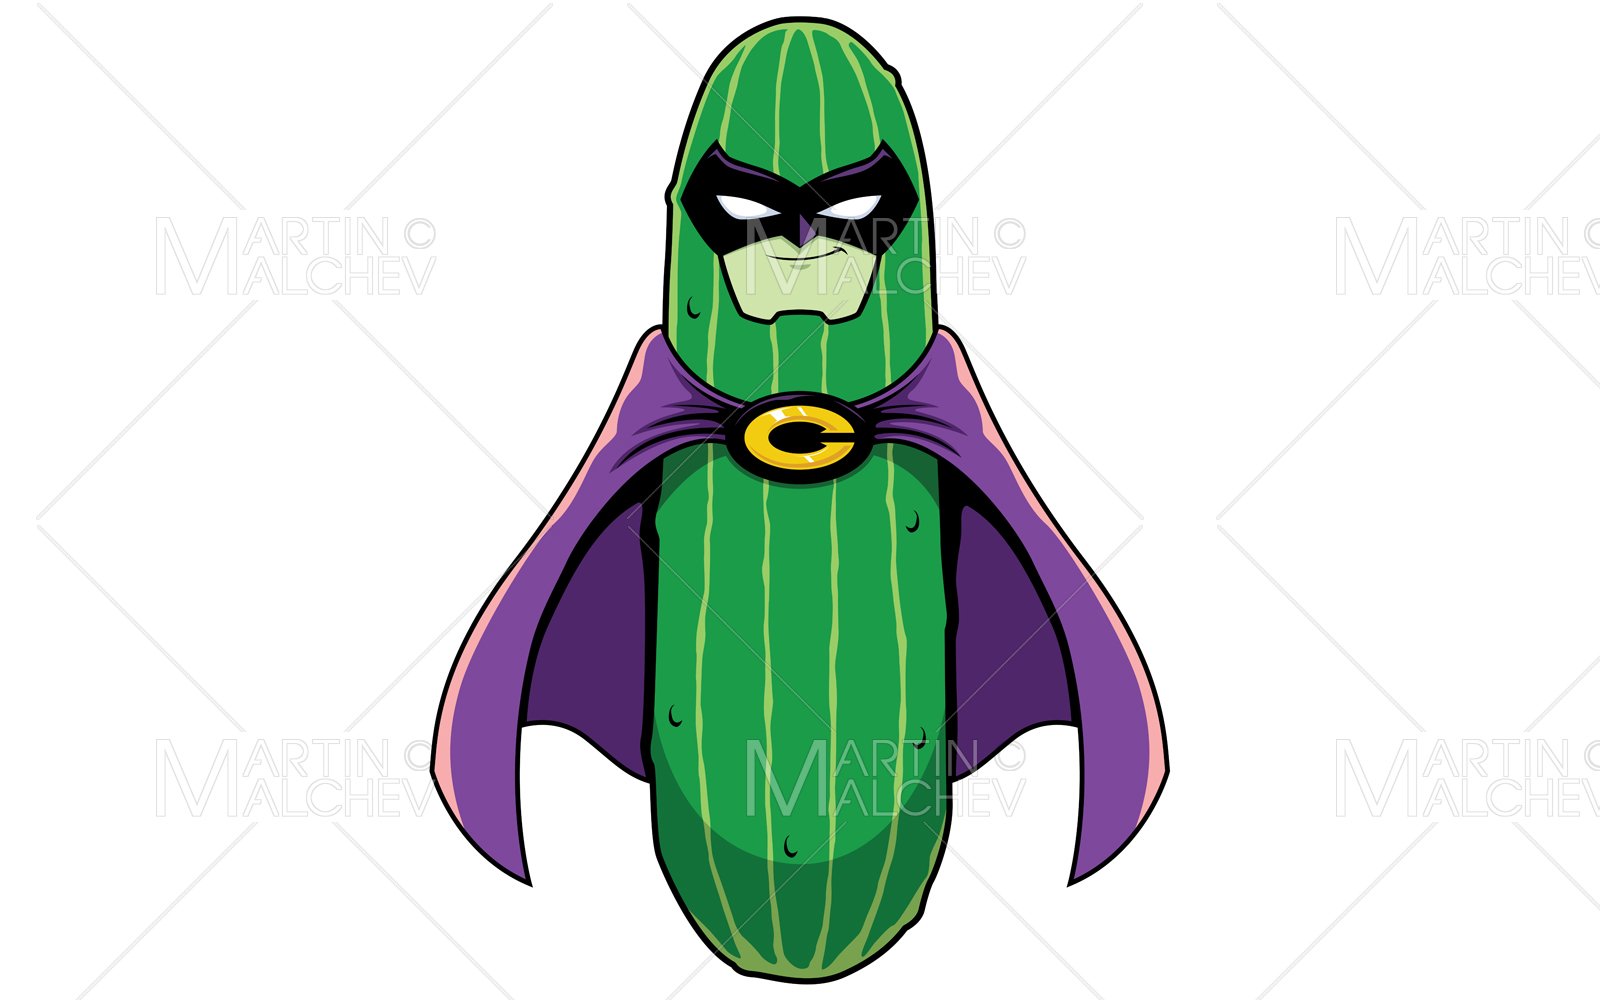 Cucumber Superhero Mascot Vector Illustration